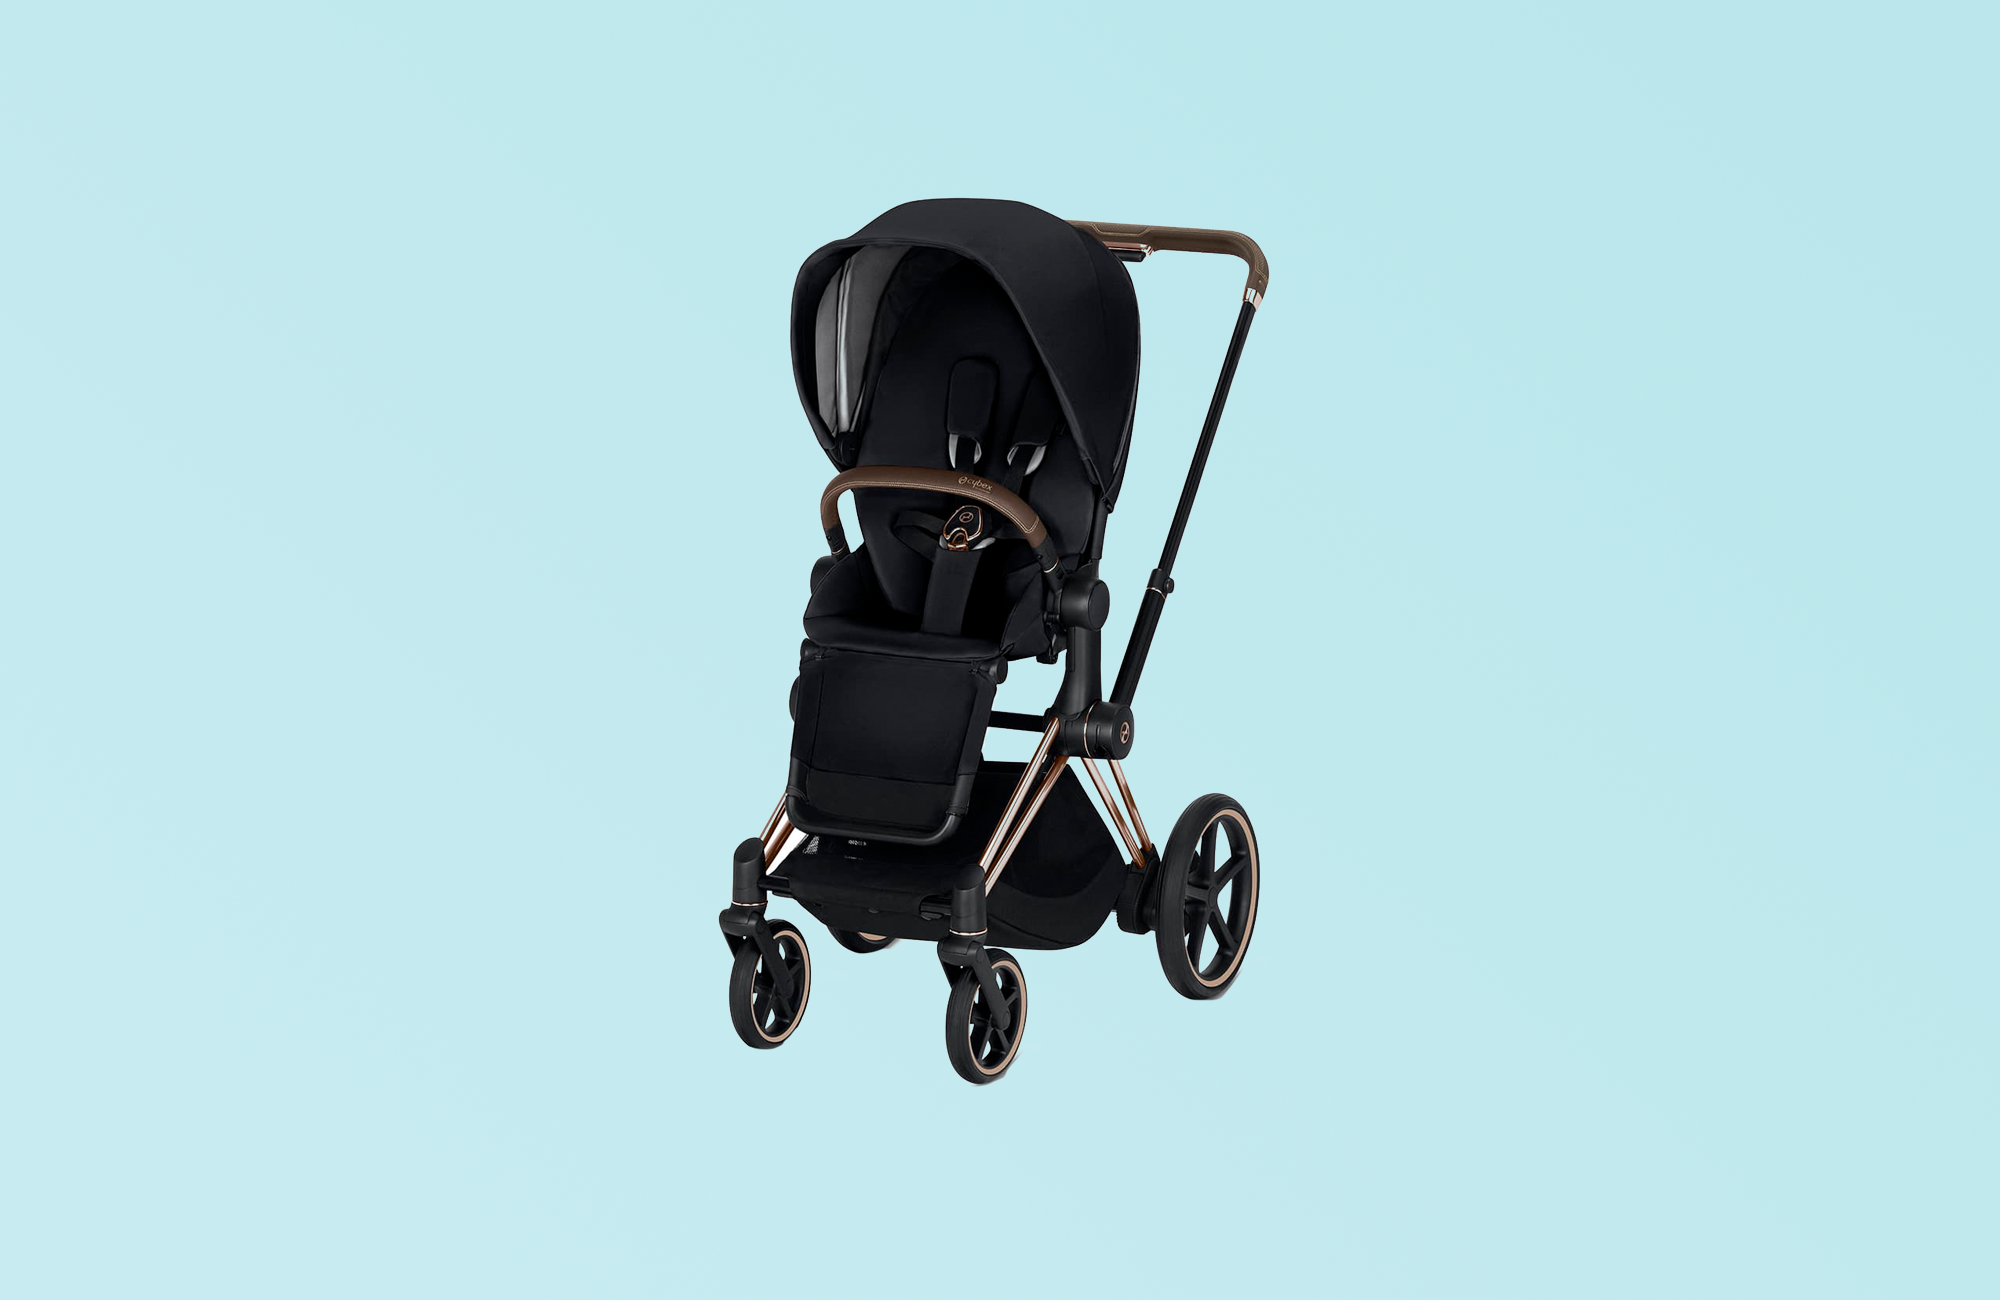 10 best baby strollers